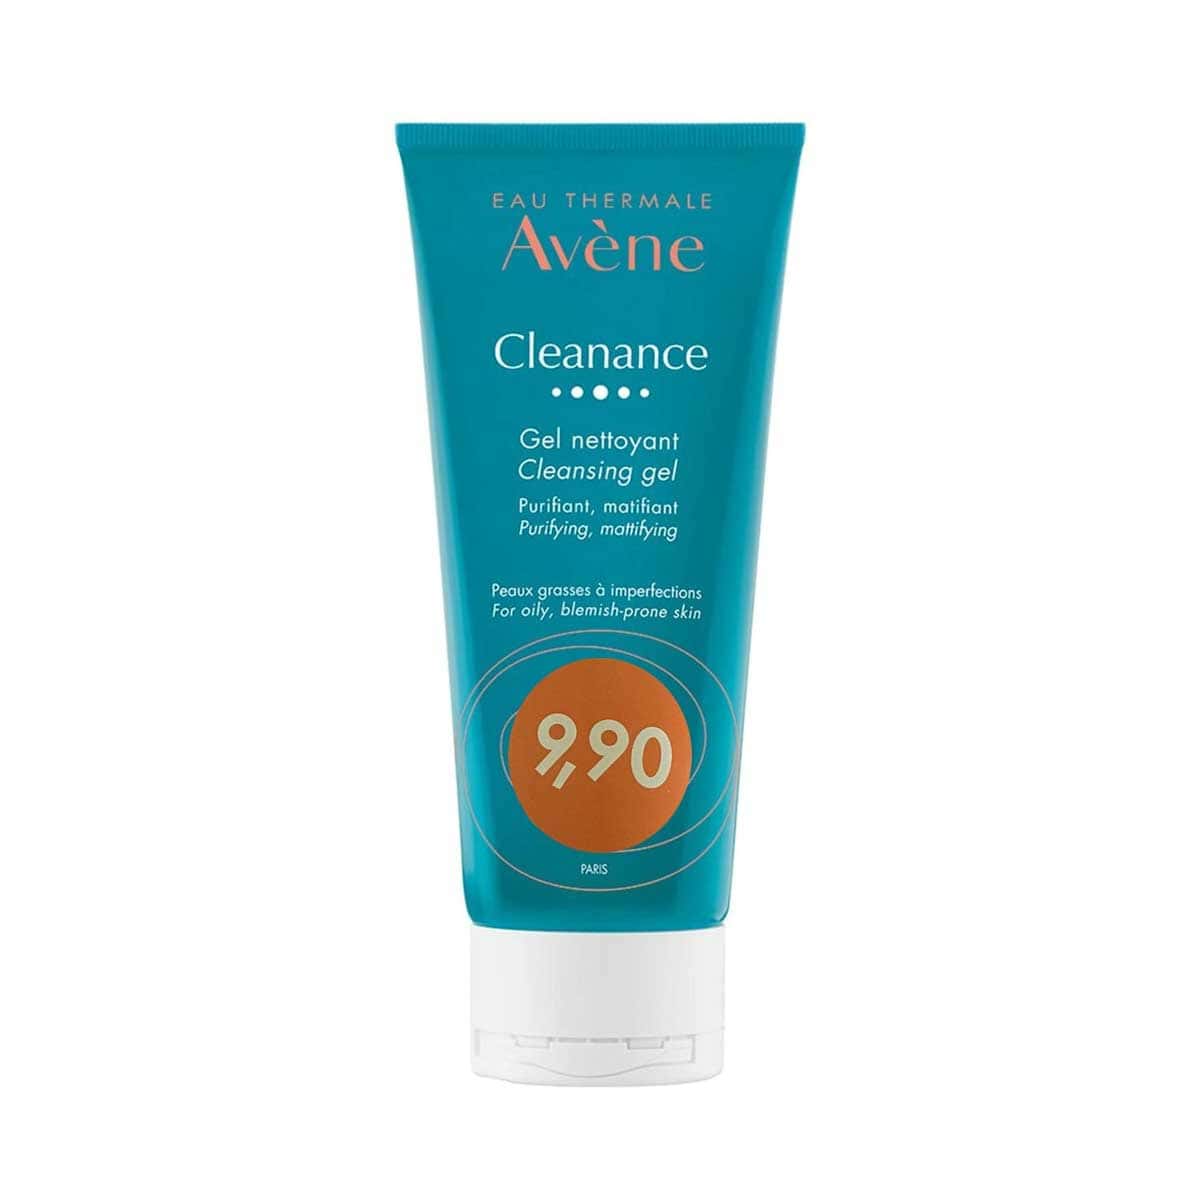 Avene-Cleanance-Cleansing-Gel-For-Oily-Blemish-Prone-Skin-200-ml-Prosfora-9.90€-3282779374262